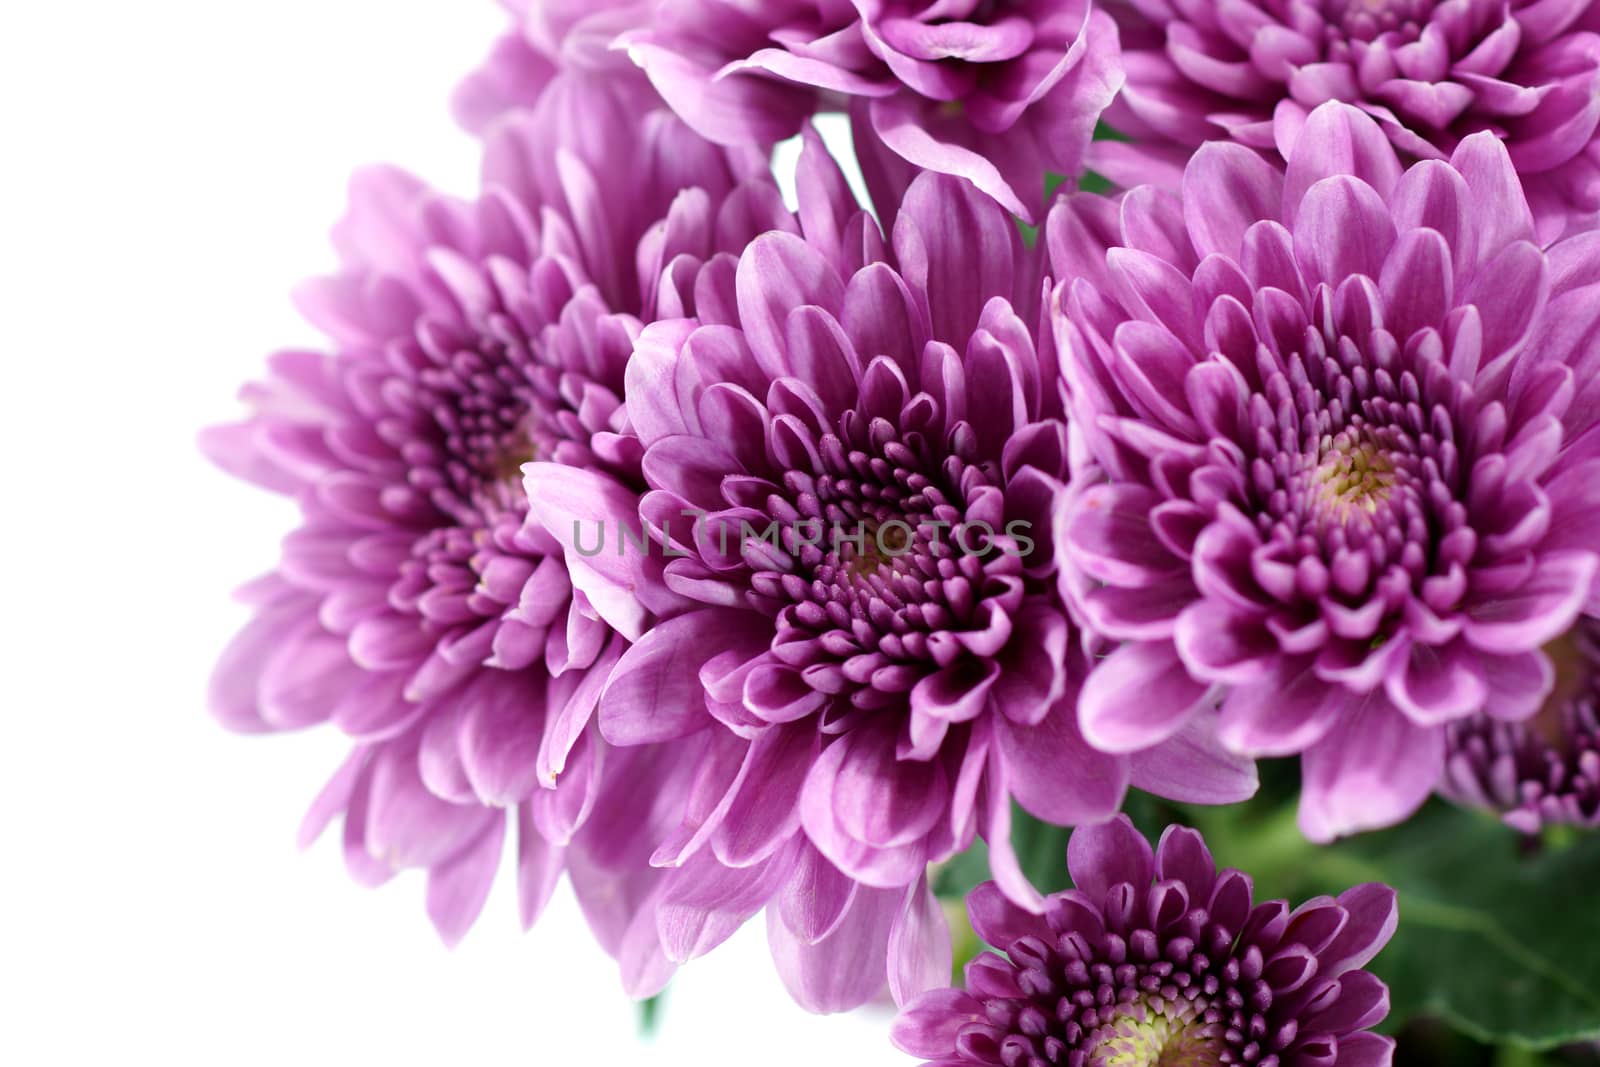 Violet chrysanthemum on white background by Noppharat_th